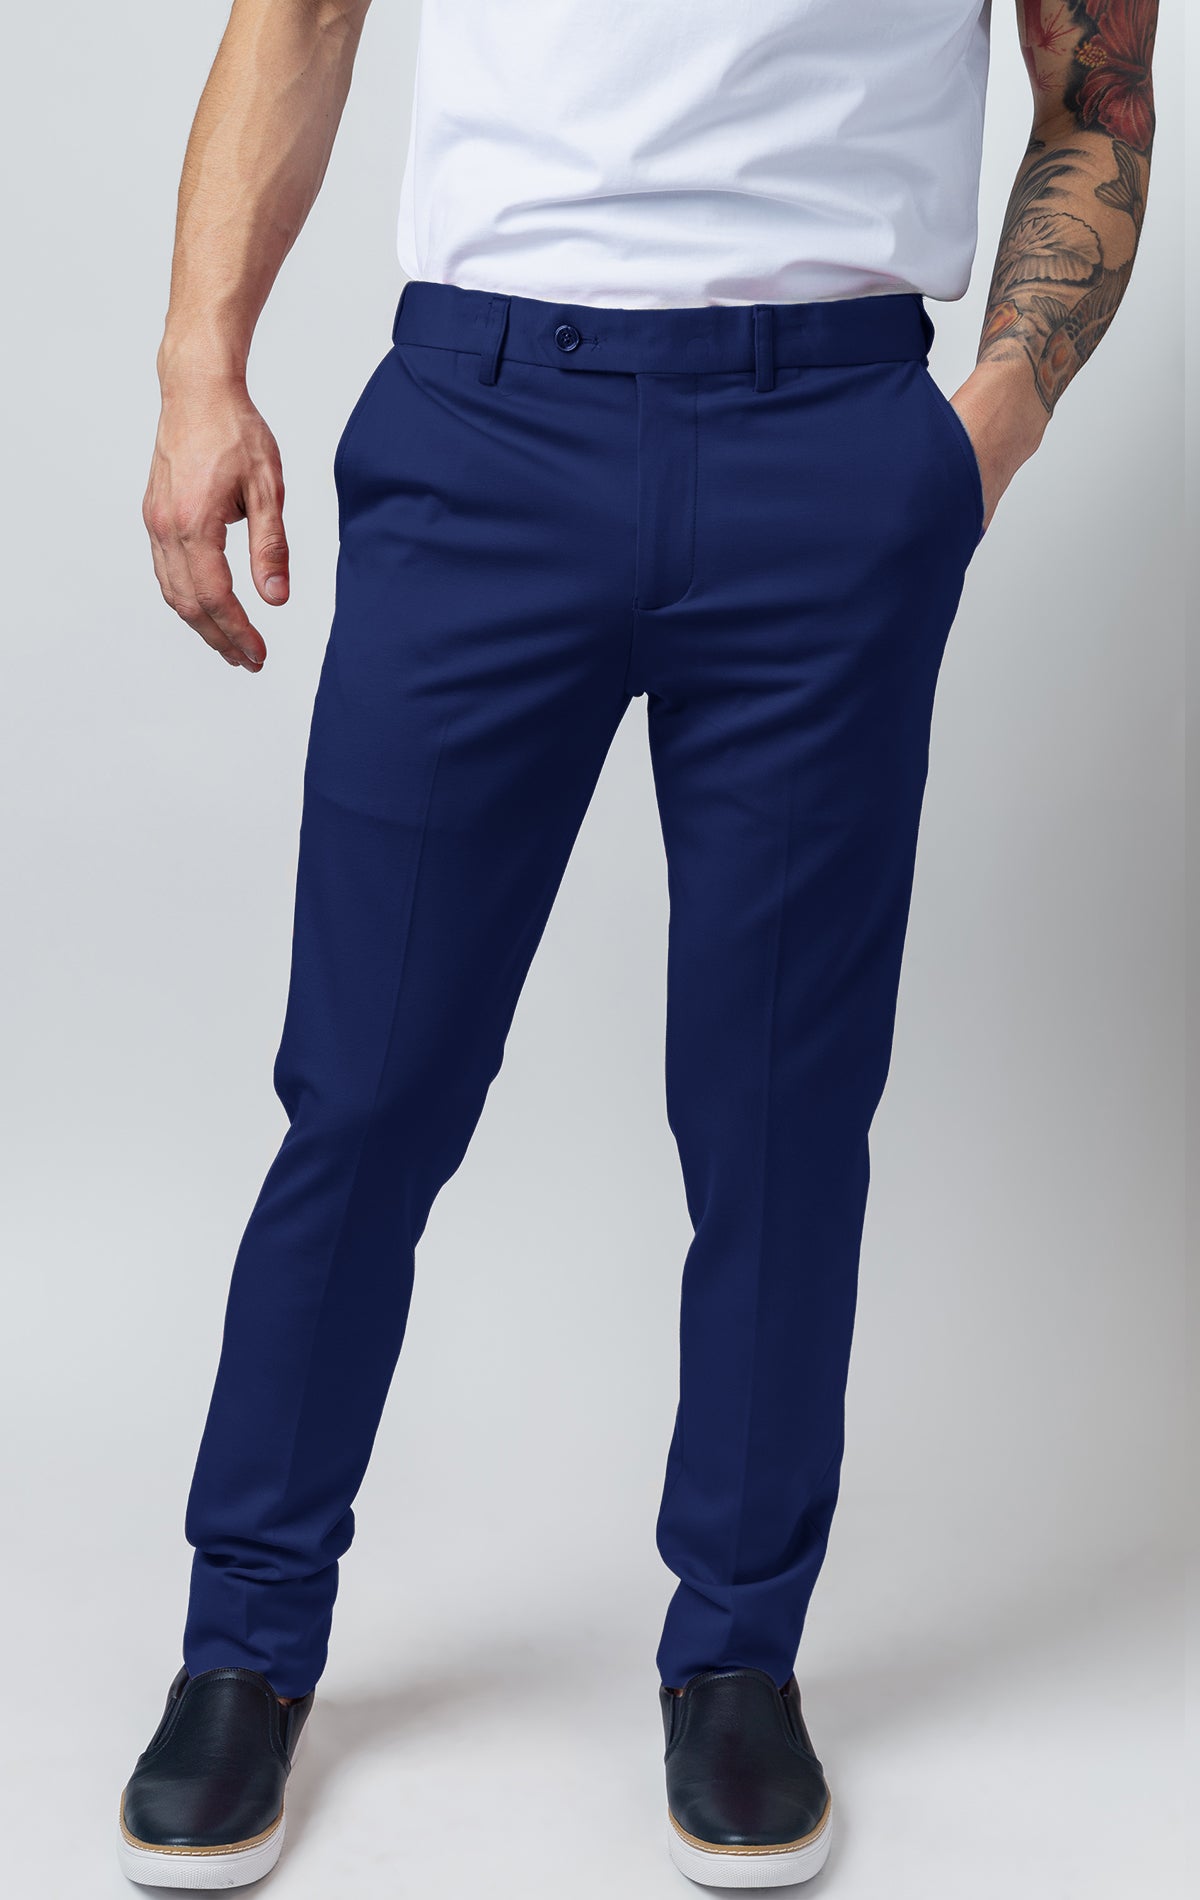 Navy casual/formal pants for men